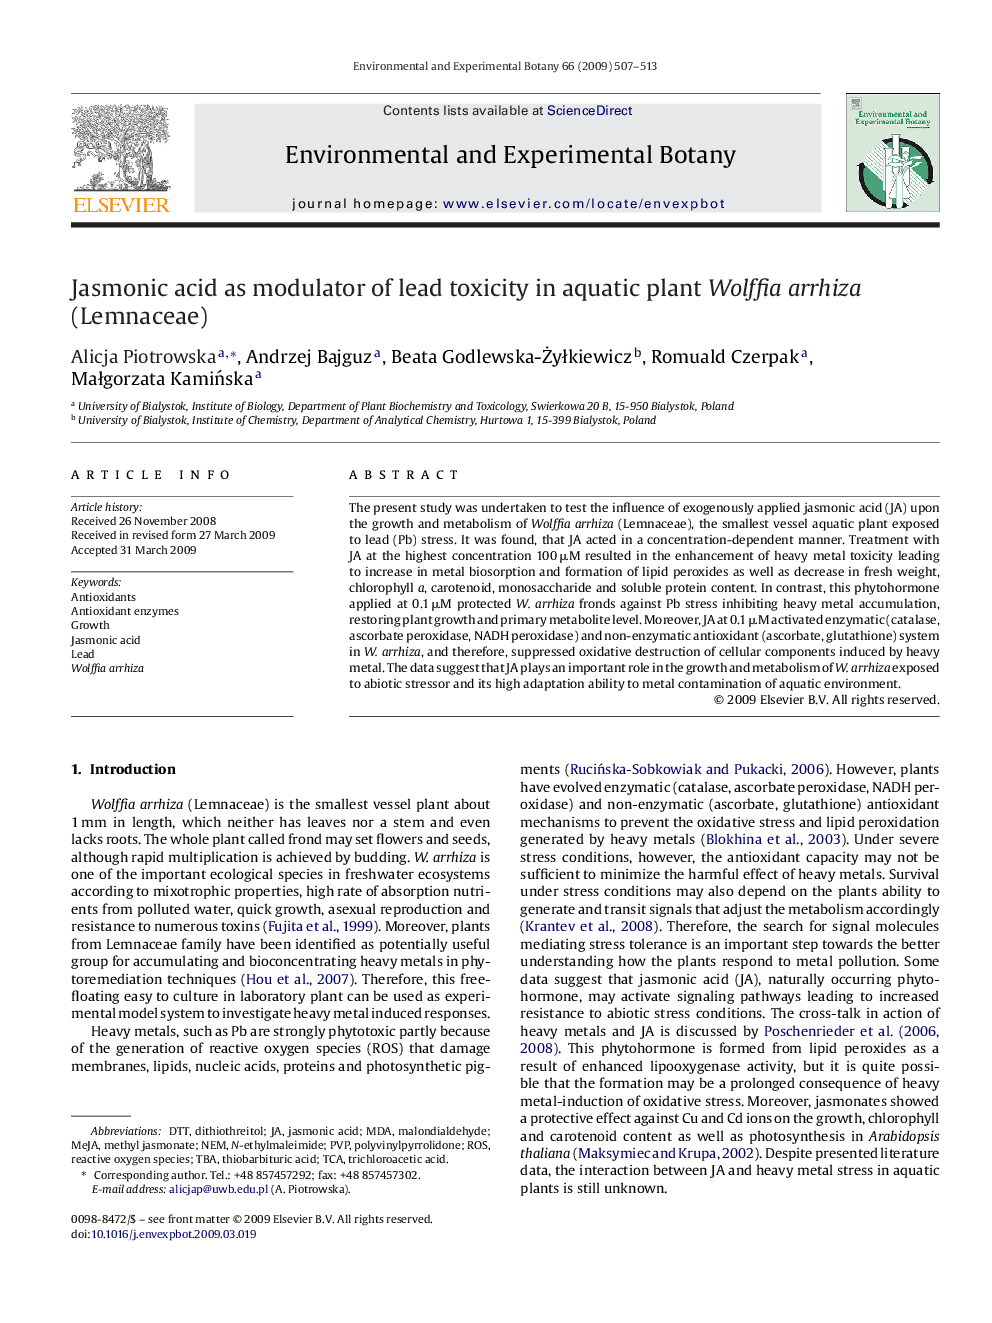 Jasmonic acid as modulator of lead toxicity in aquatic plant Wolffia arrhiza (Lemnaceae)